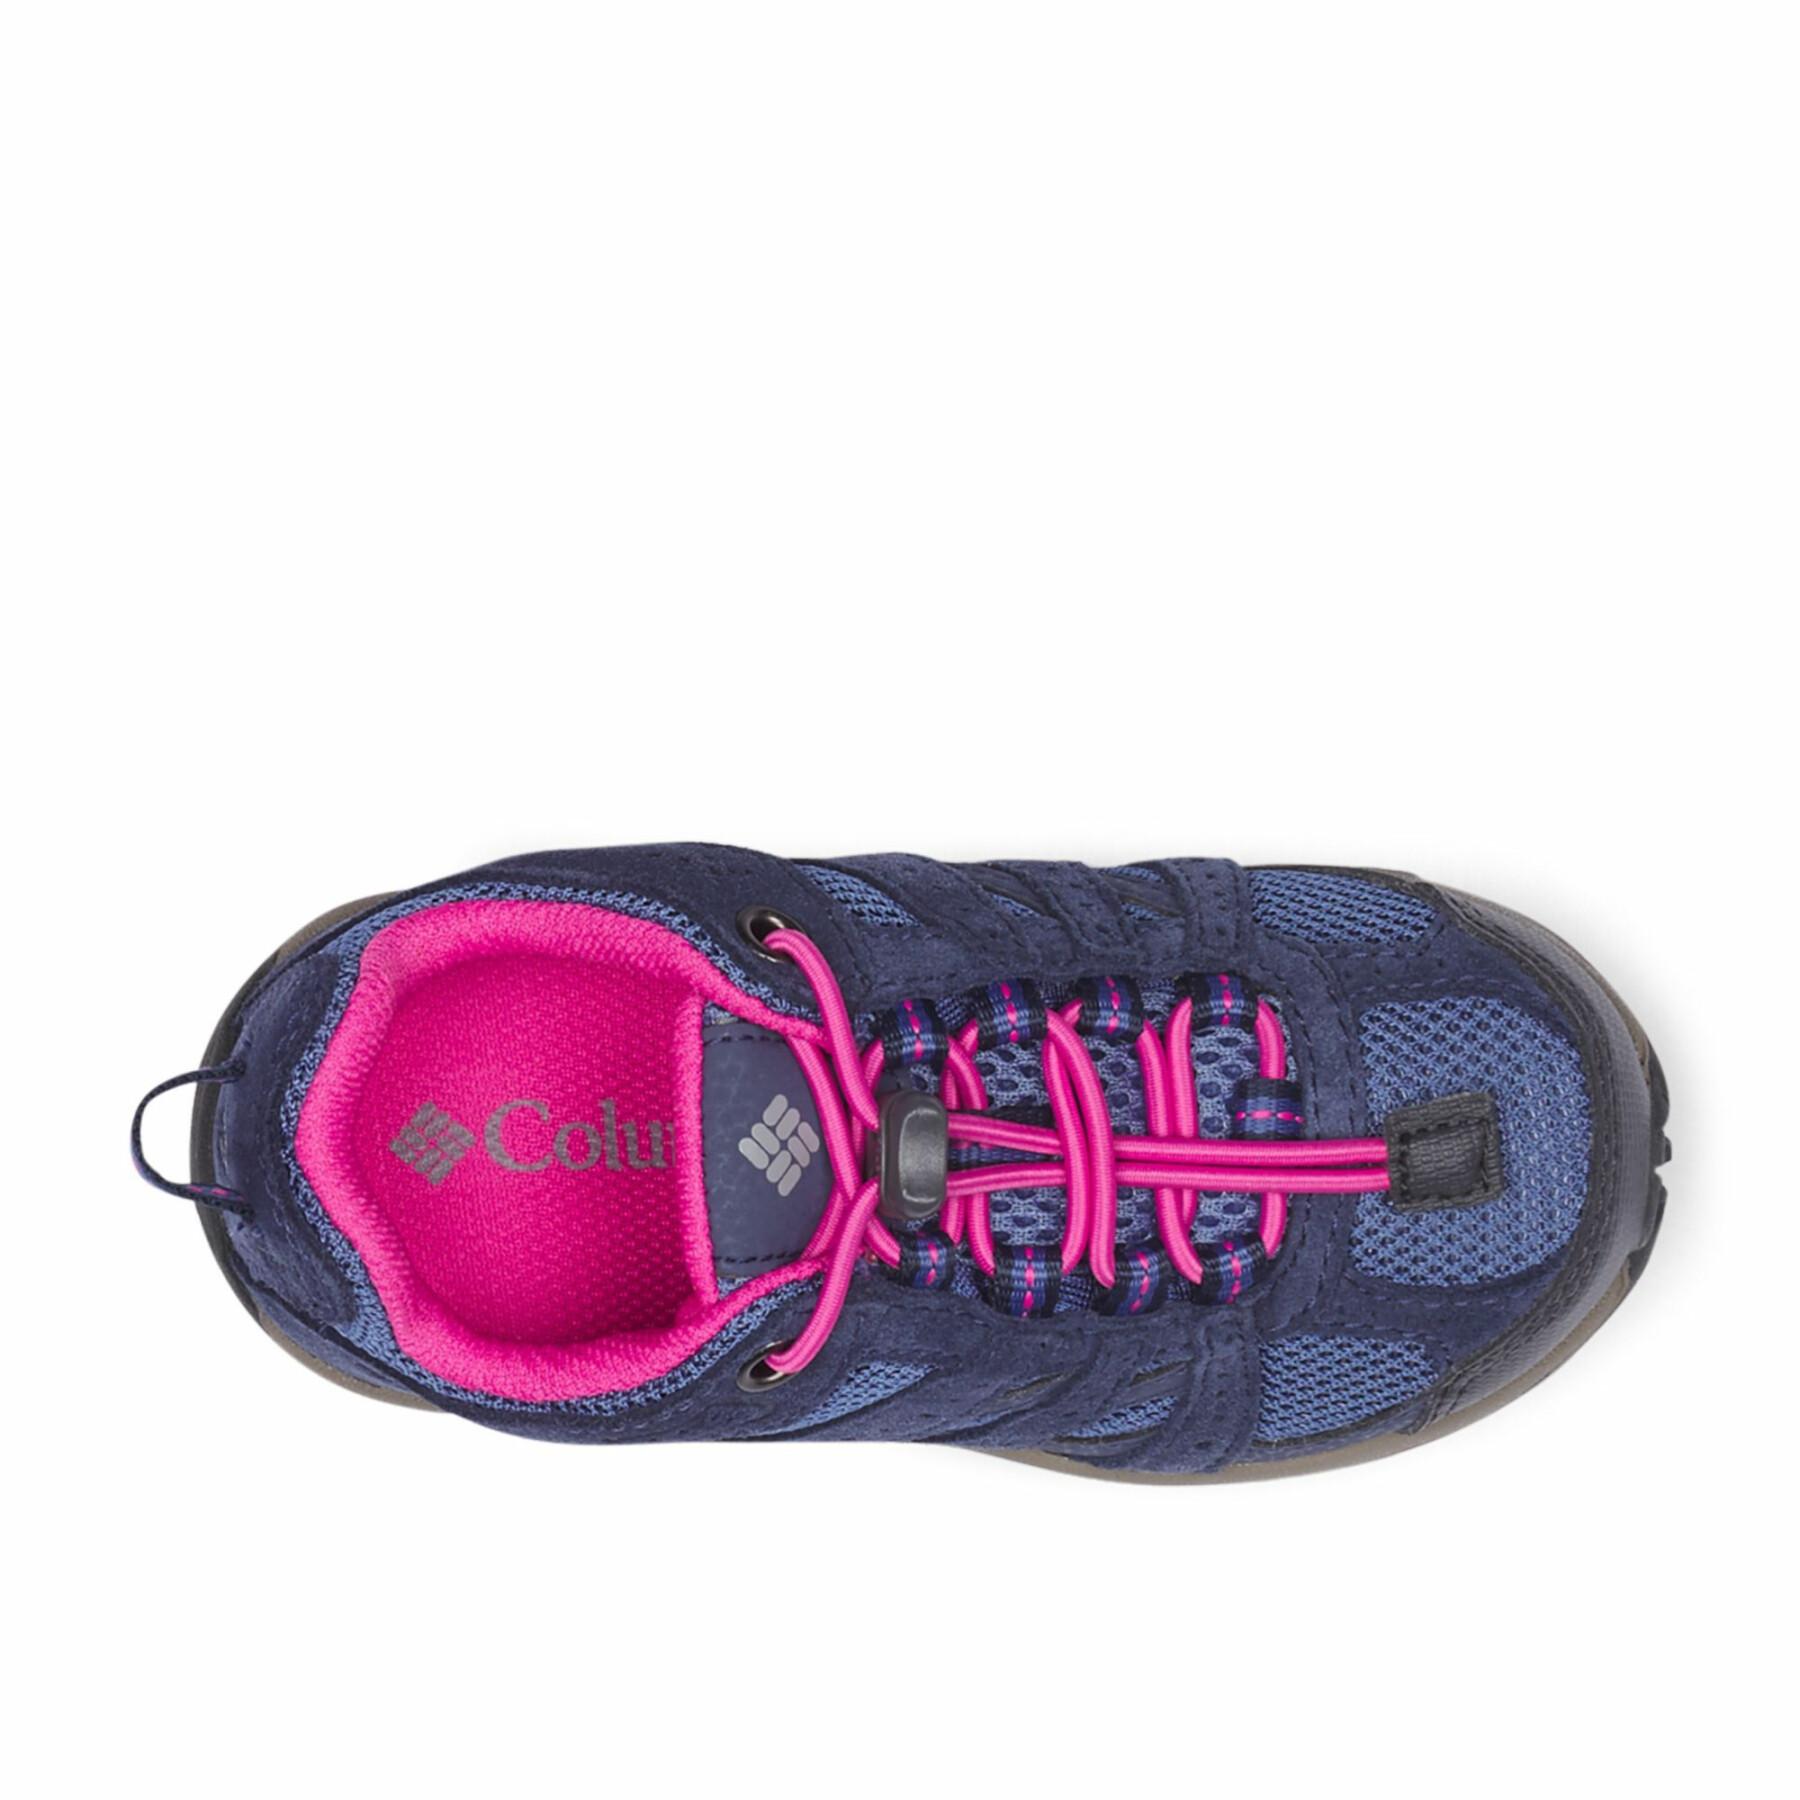 Zapatos para niños Columbia Redmond waterproof